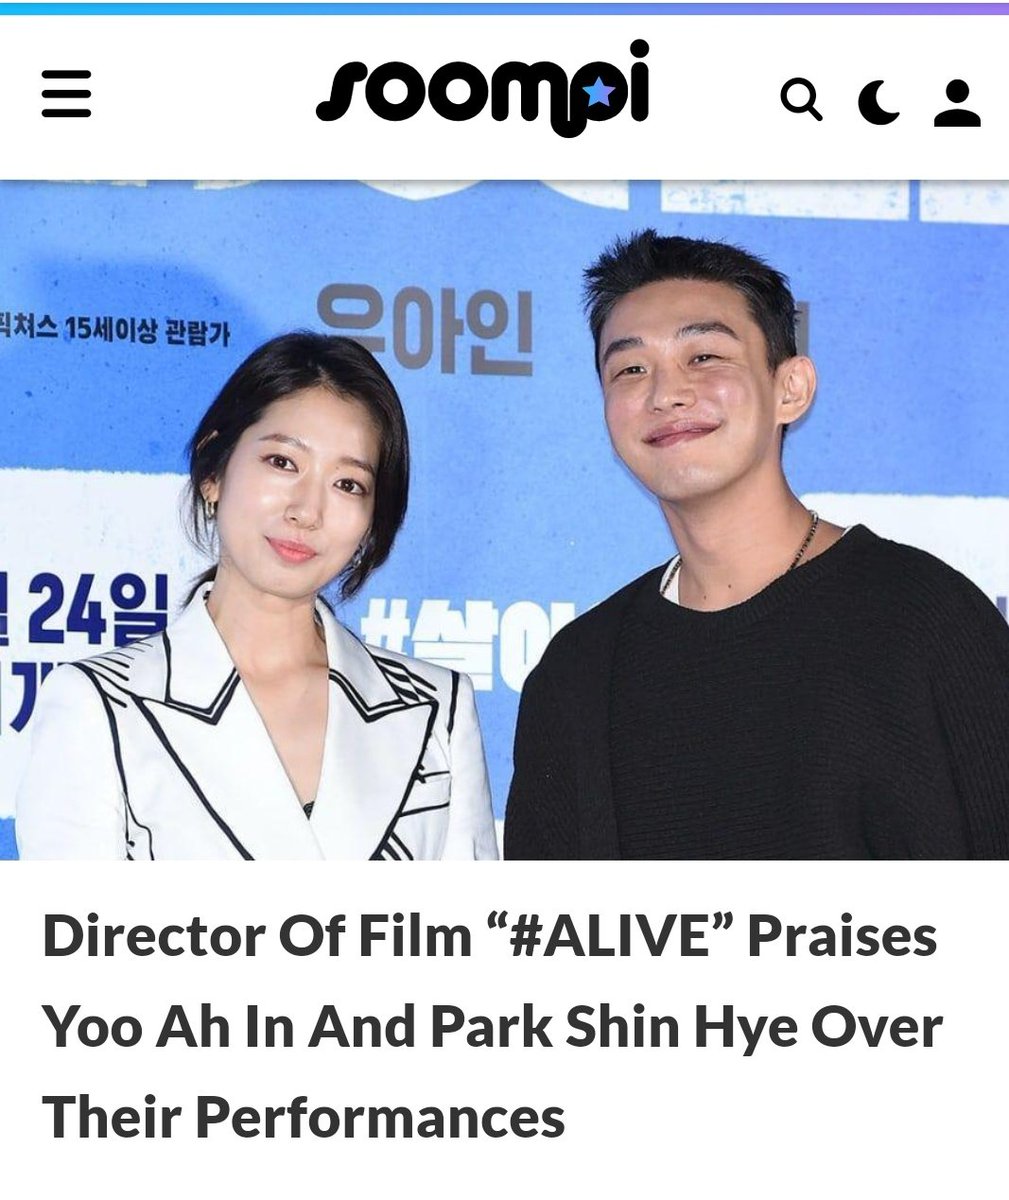 Director Jo Il Hyung of “ #ALIVE”